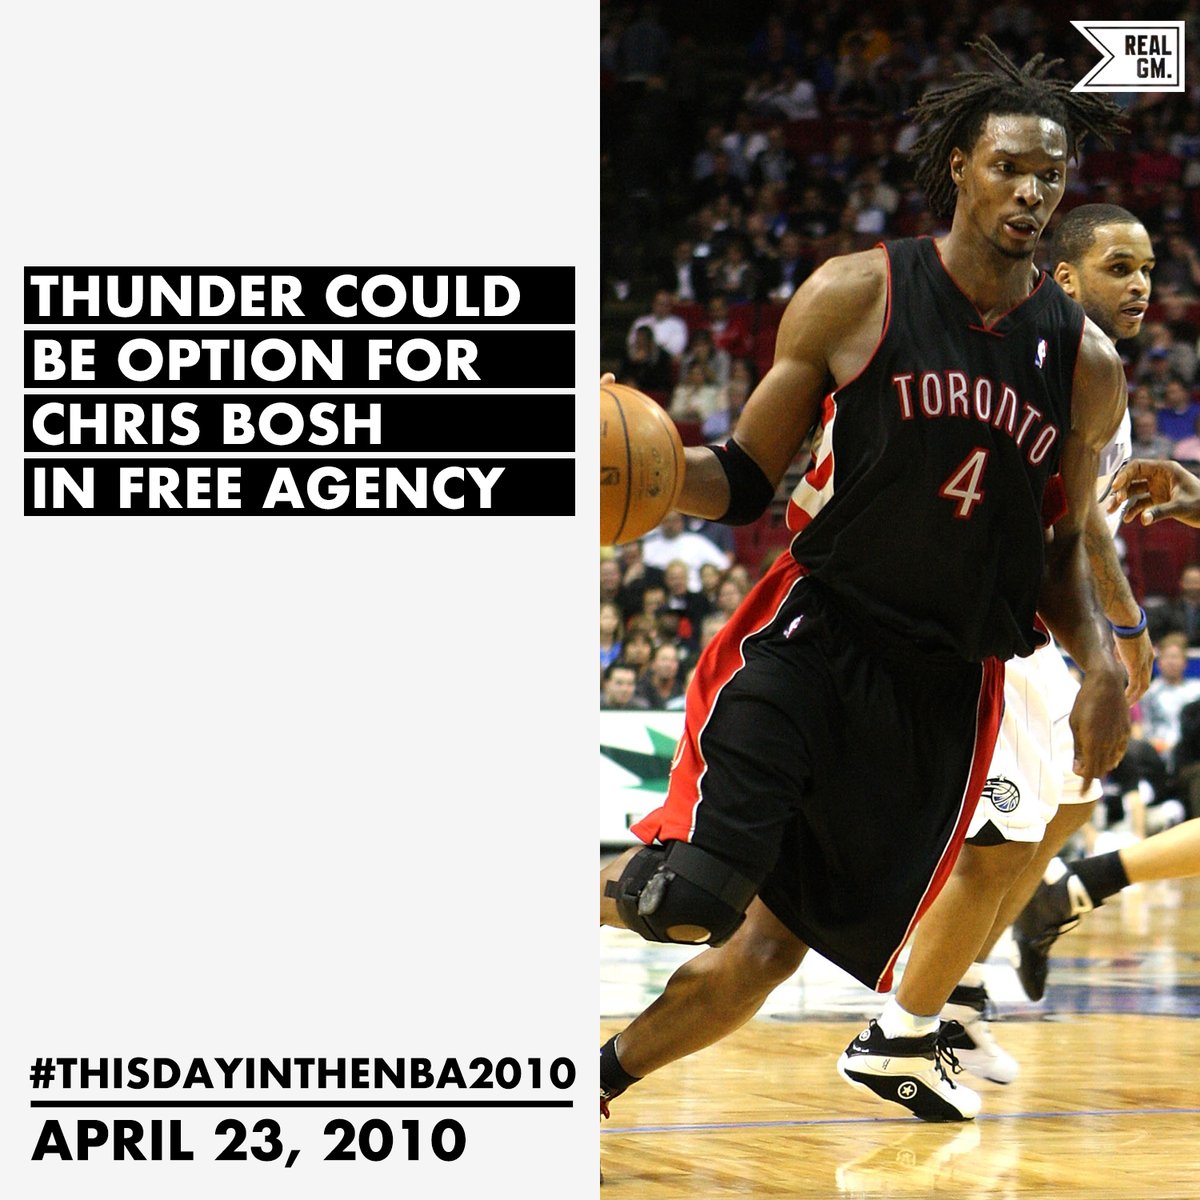  #ThisDayInTheNBA2010April 23, 2010Thunder Could Be Option For Chris Bosh https://basketball.realgm.com/wiretap/203475/Thunder-Could-Be-Option-For-Chris-Bosh